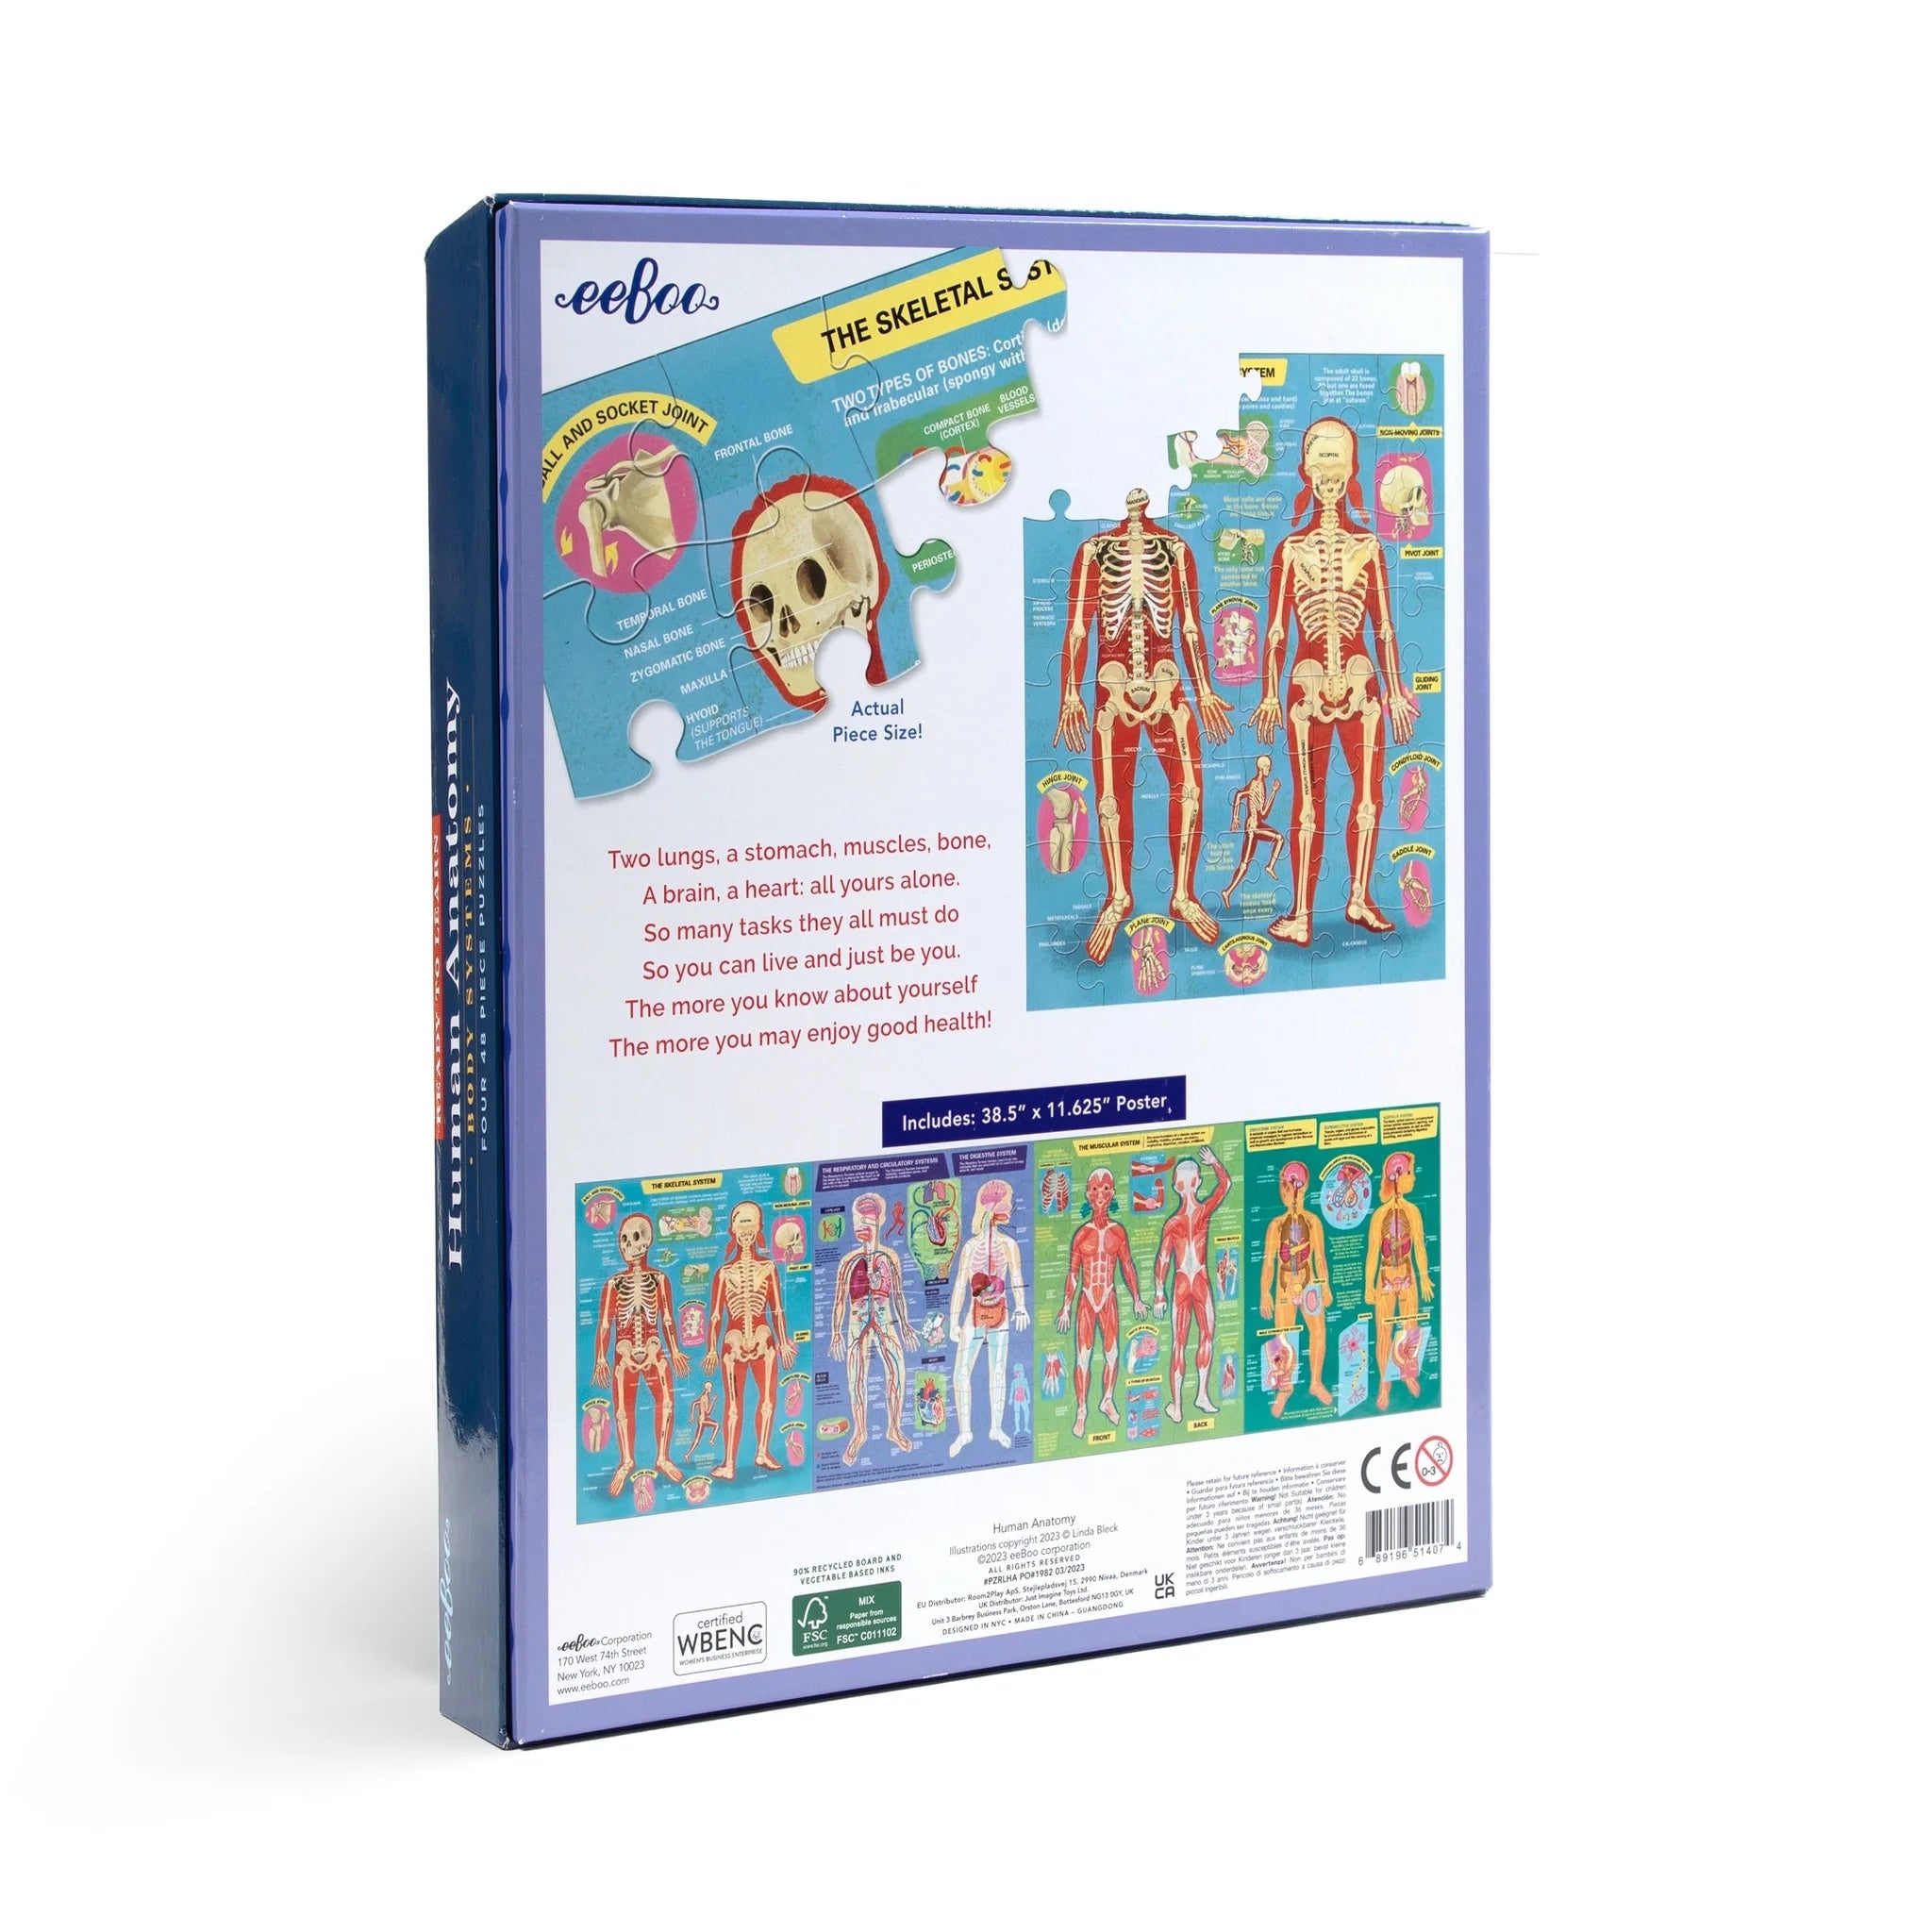 Human Anatomy 4-Puzzle Set